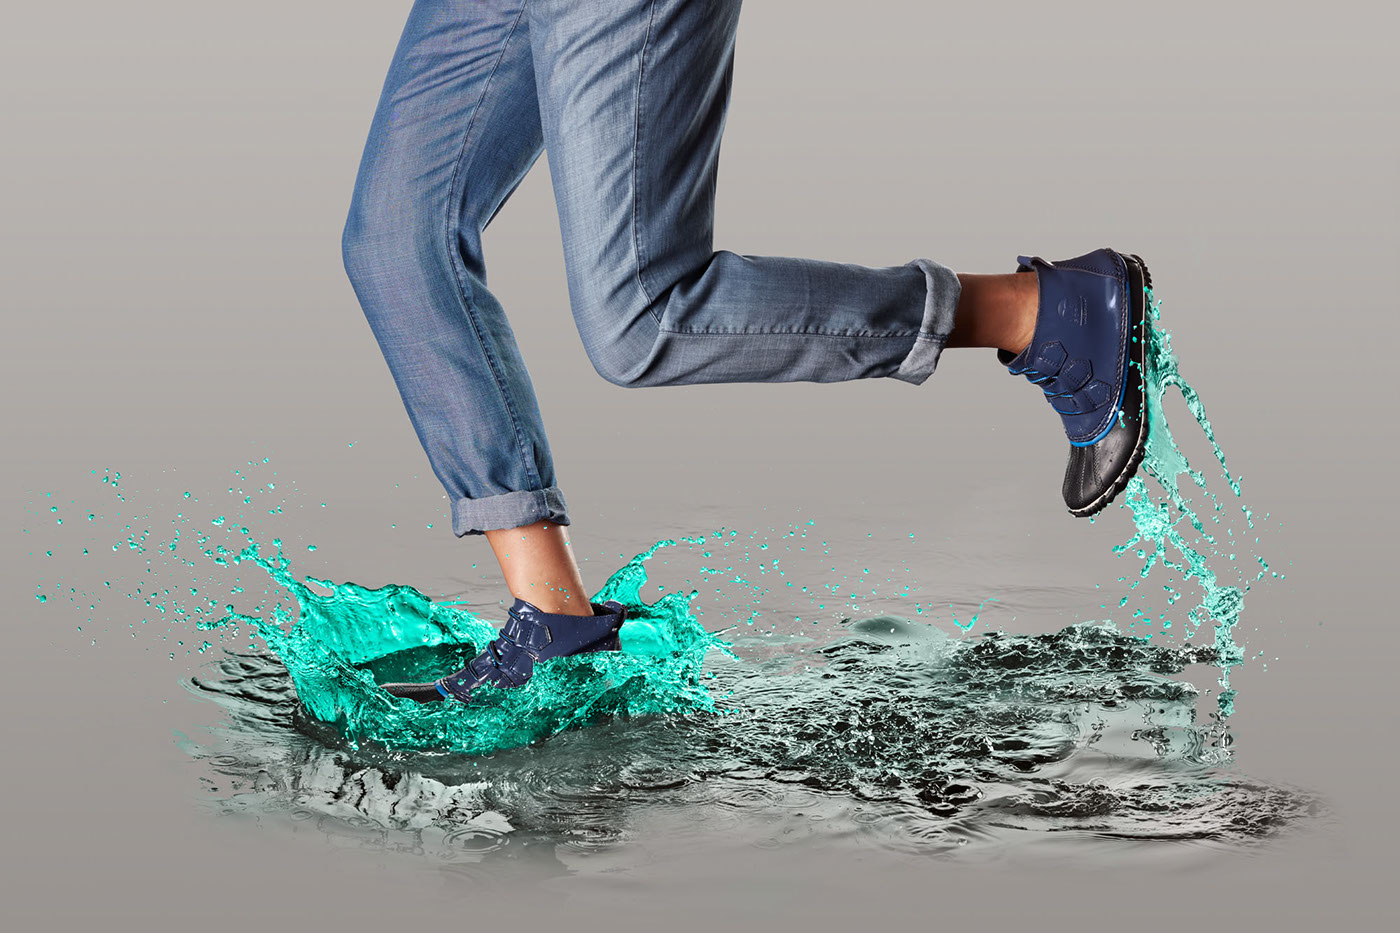 Photography  product Fashion  footwear splash stop motion portrait